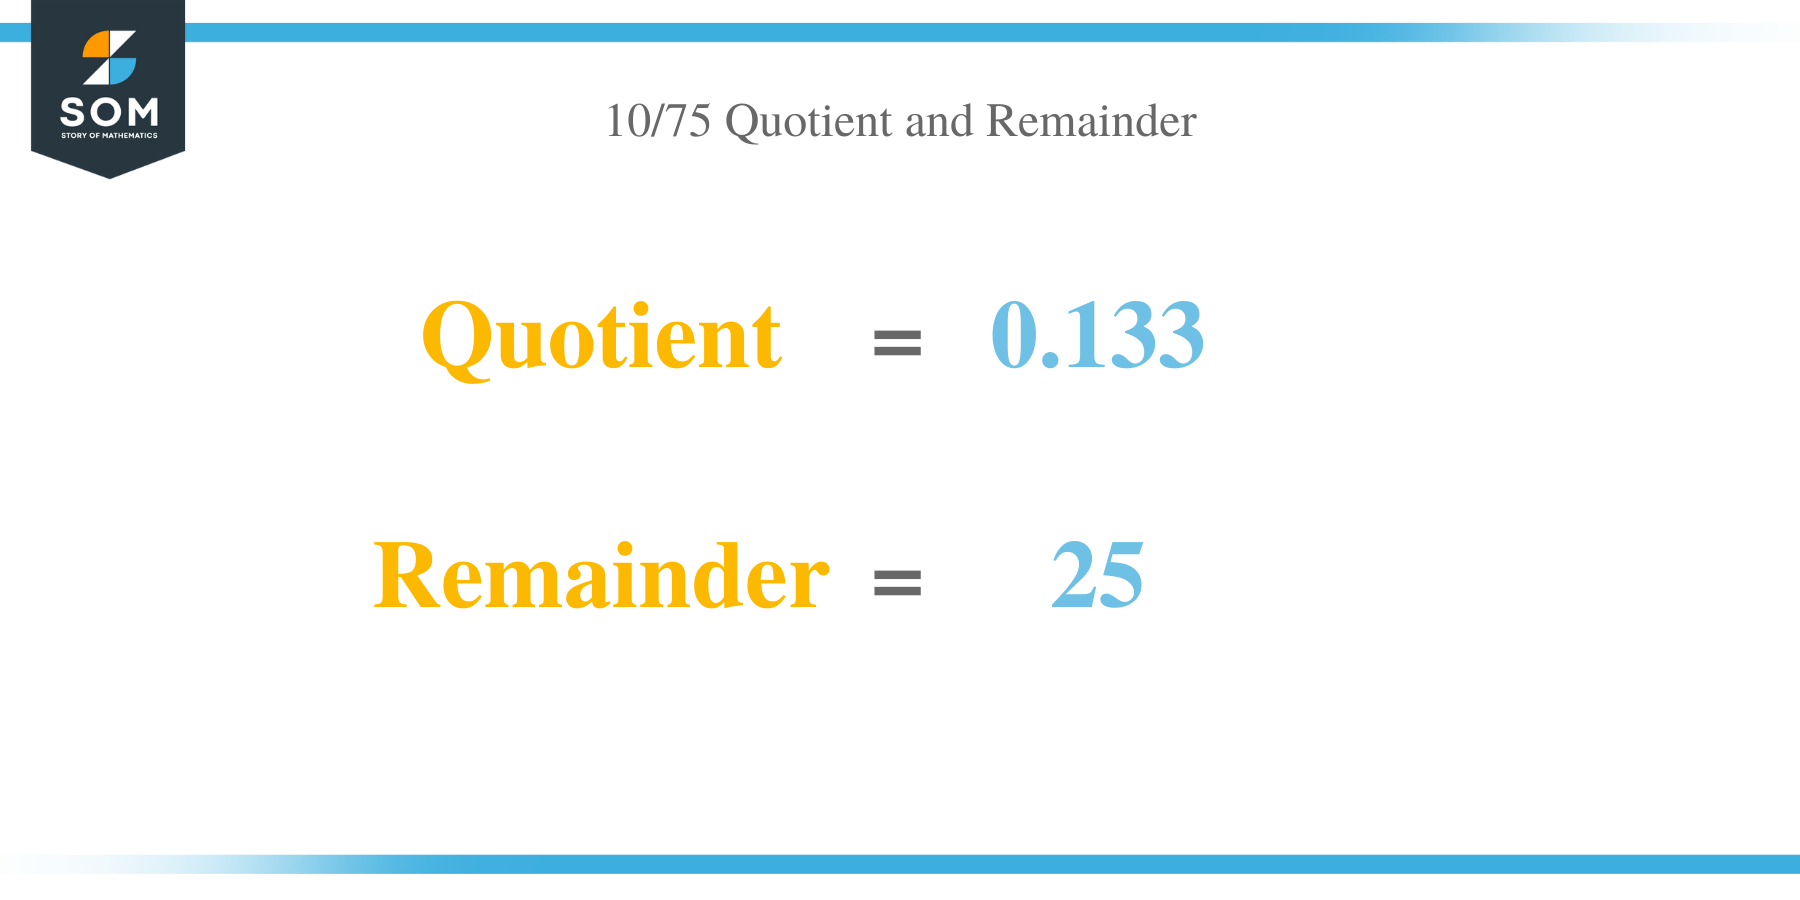 Quotient and Remainder of 10 per 75